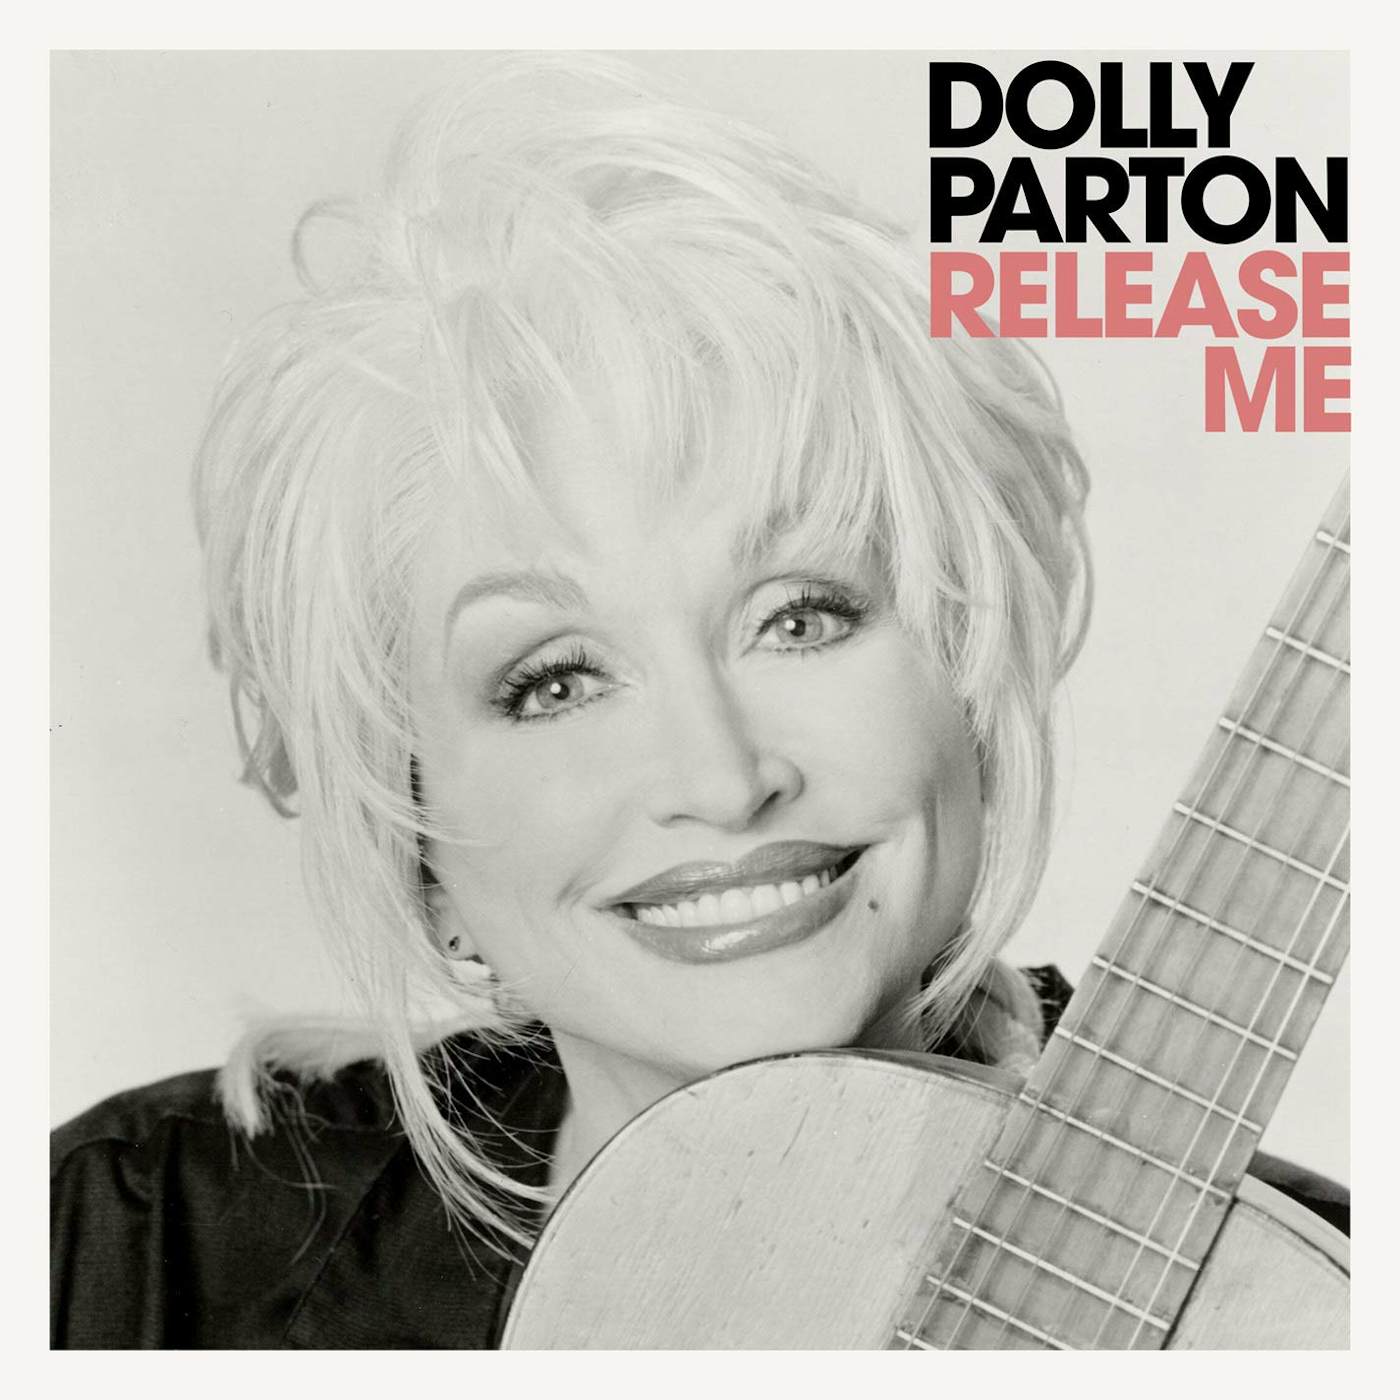 Dolly Parton RELEASE ME CD